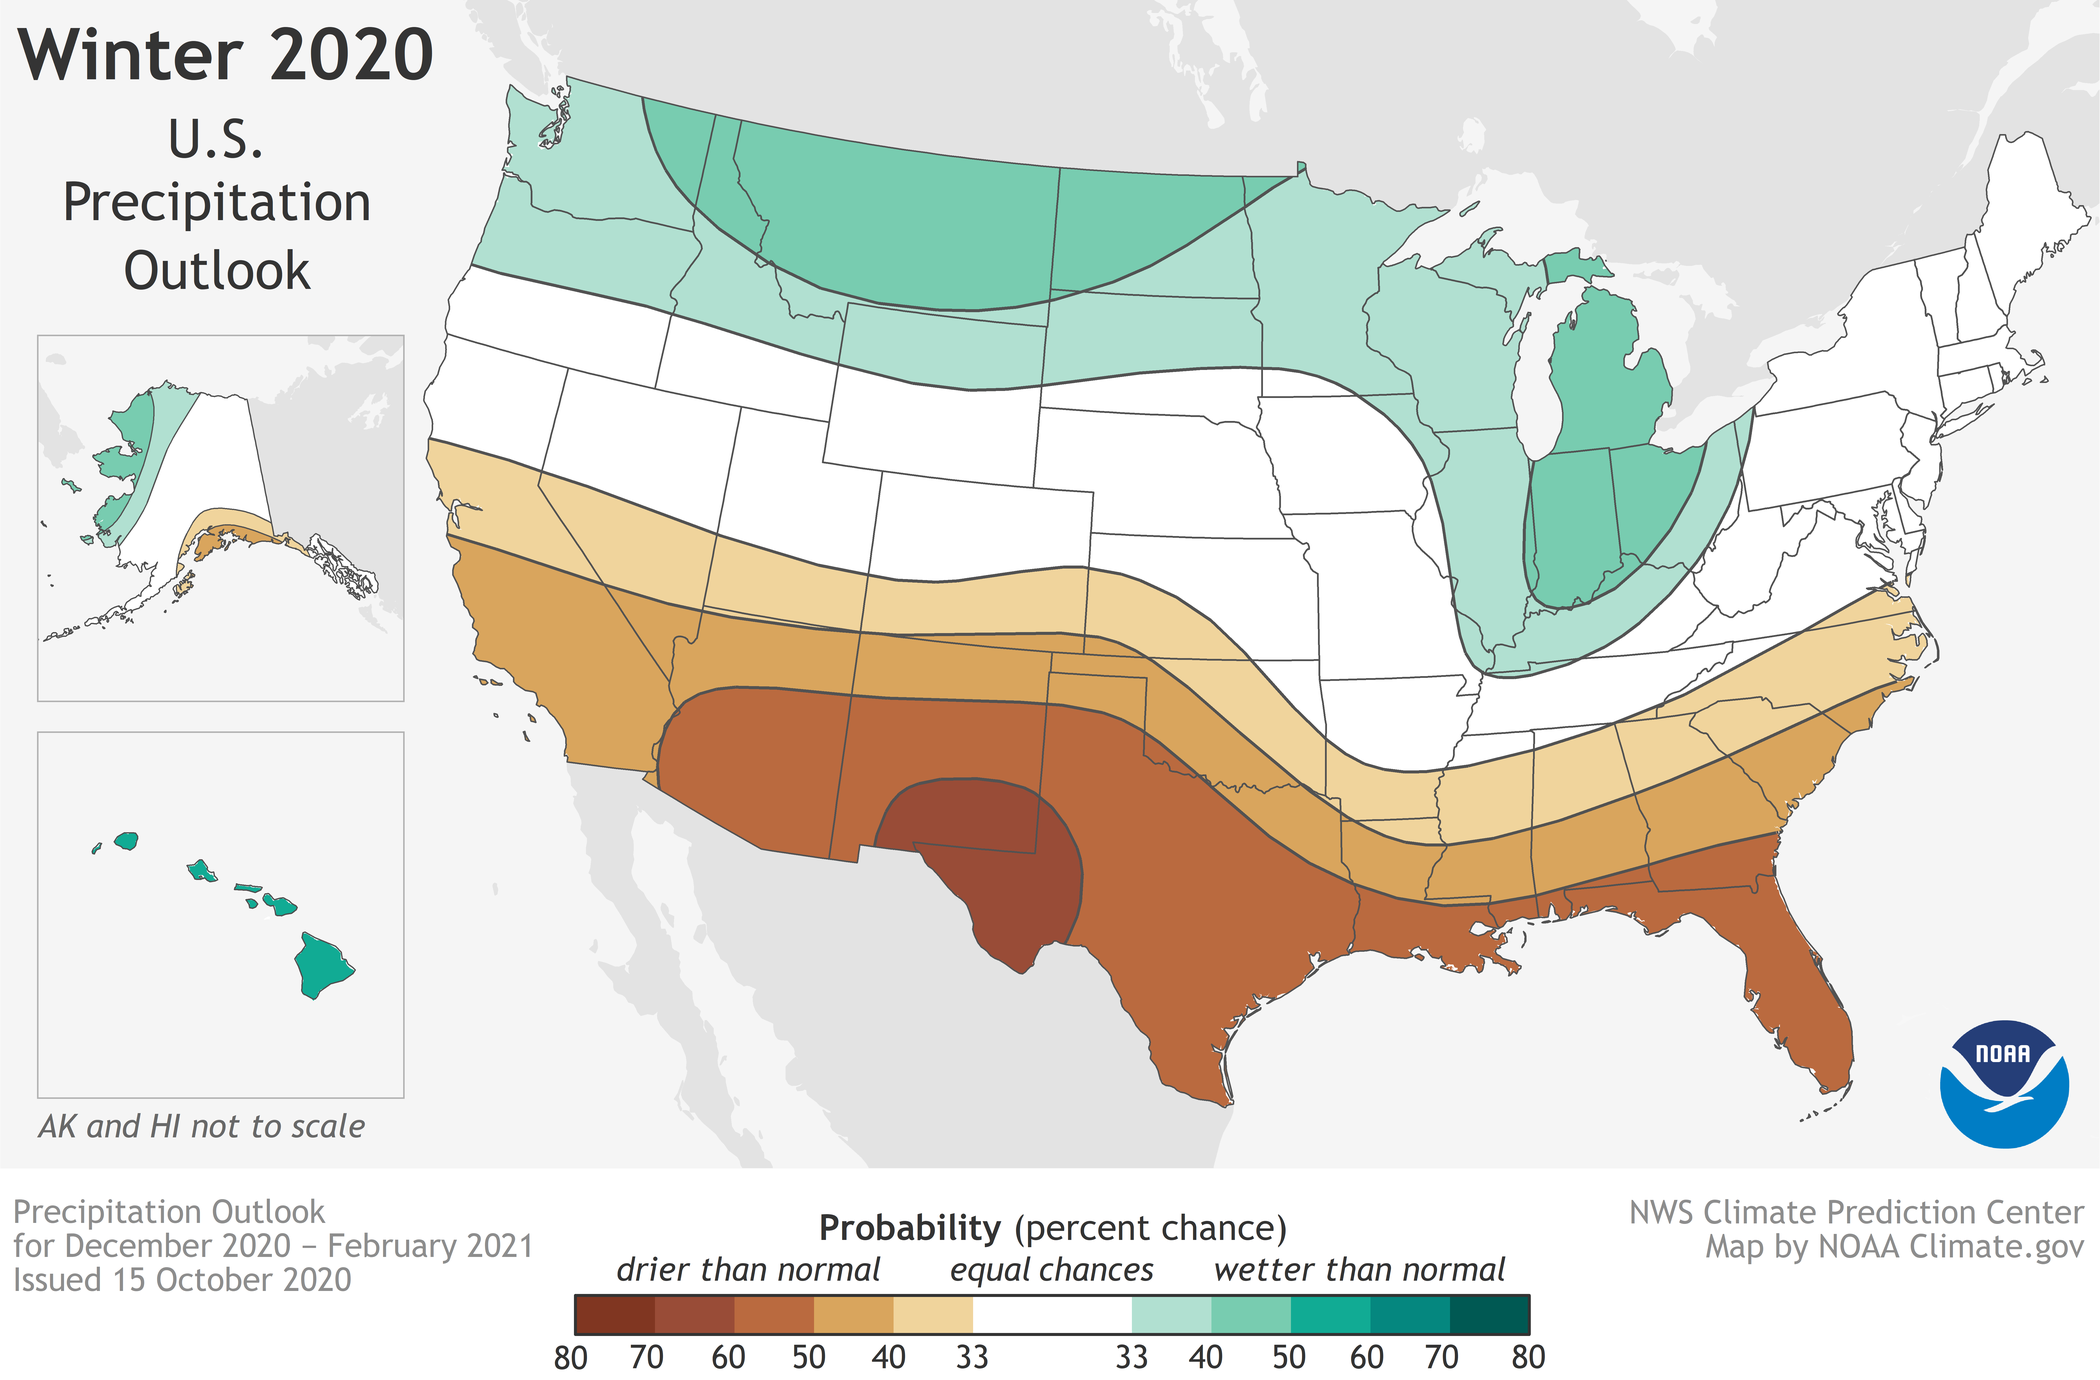 U.S. Winter Outlook precipitation map